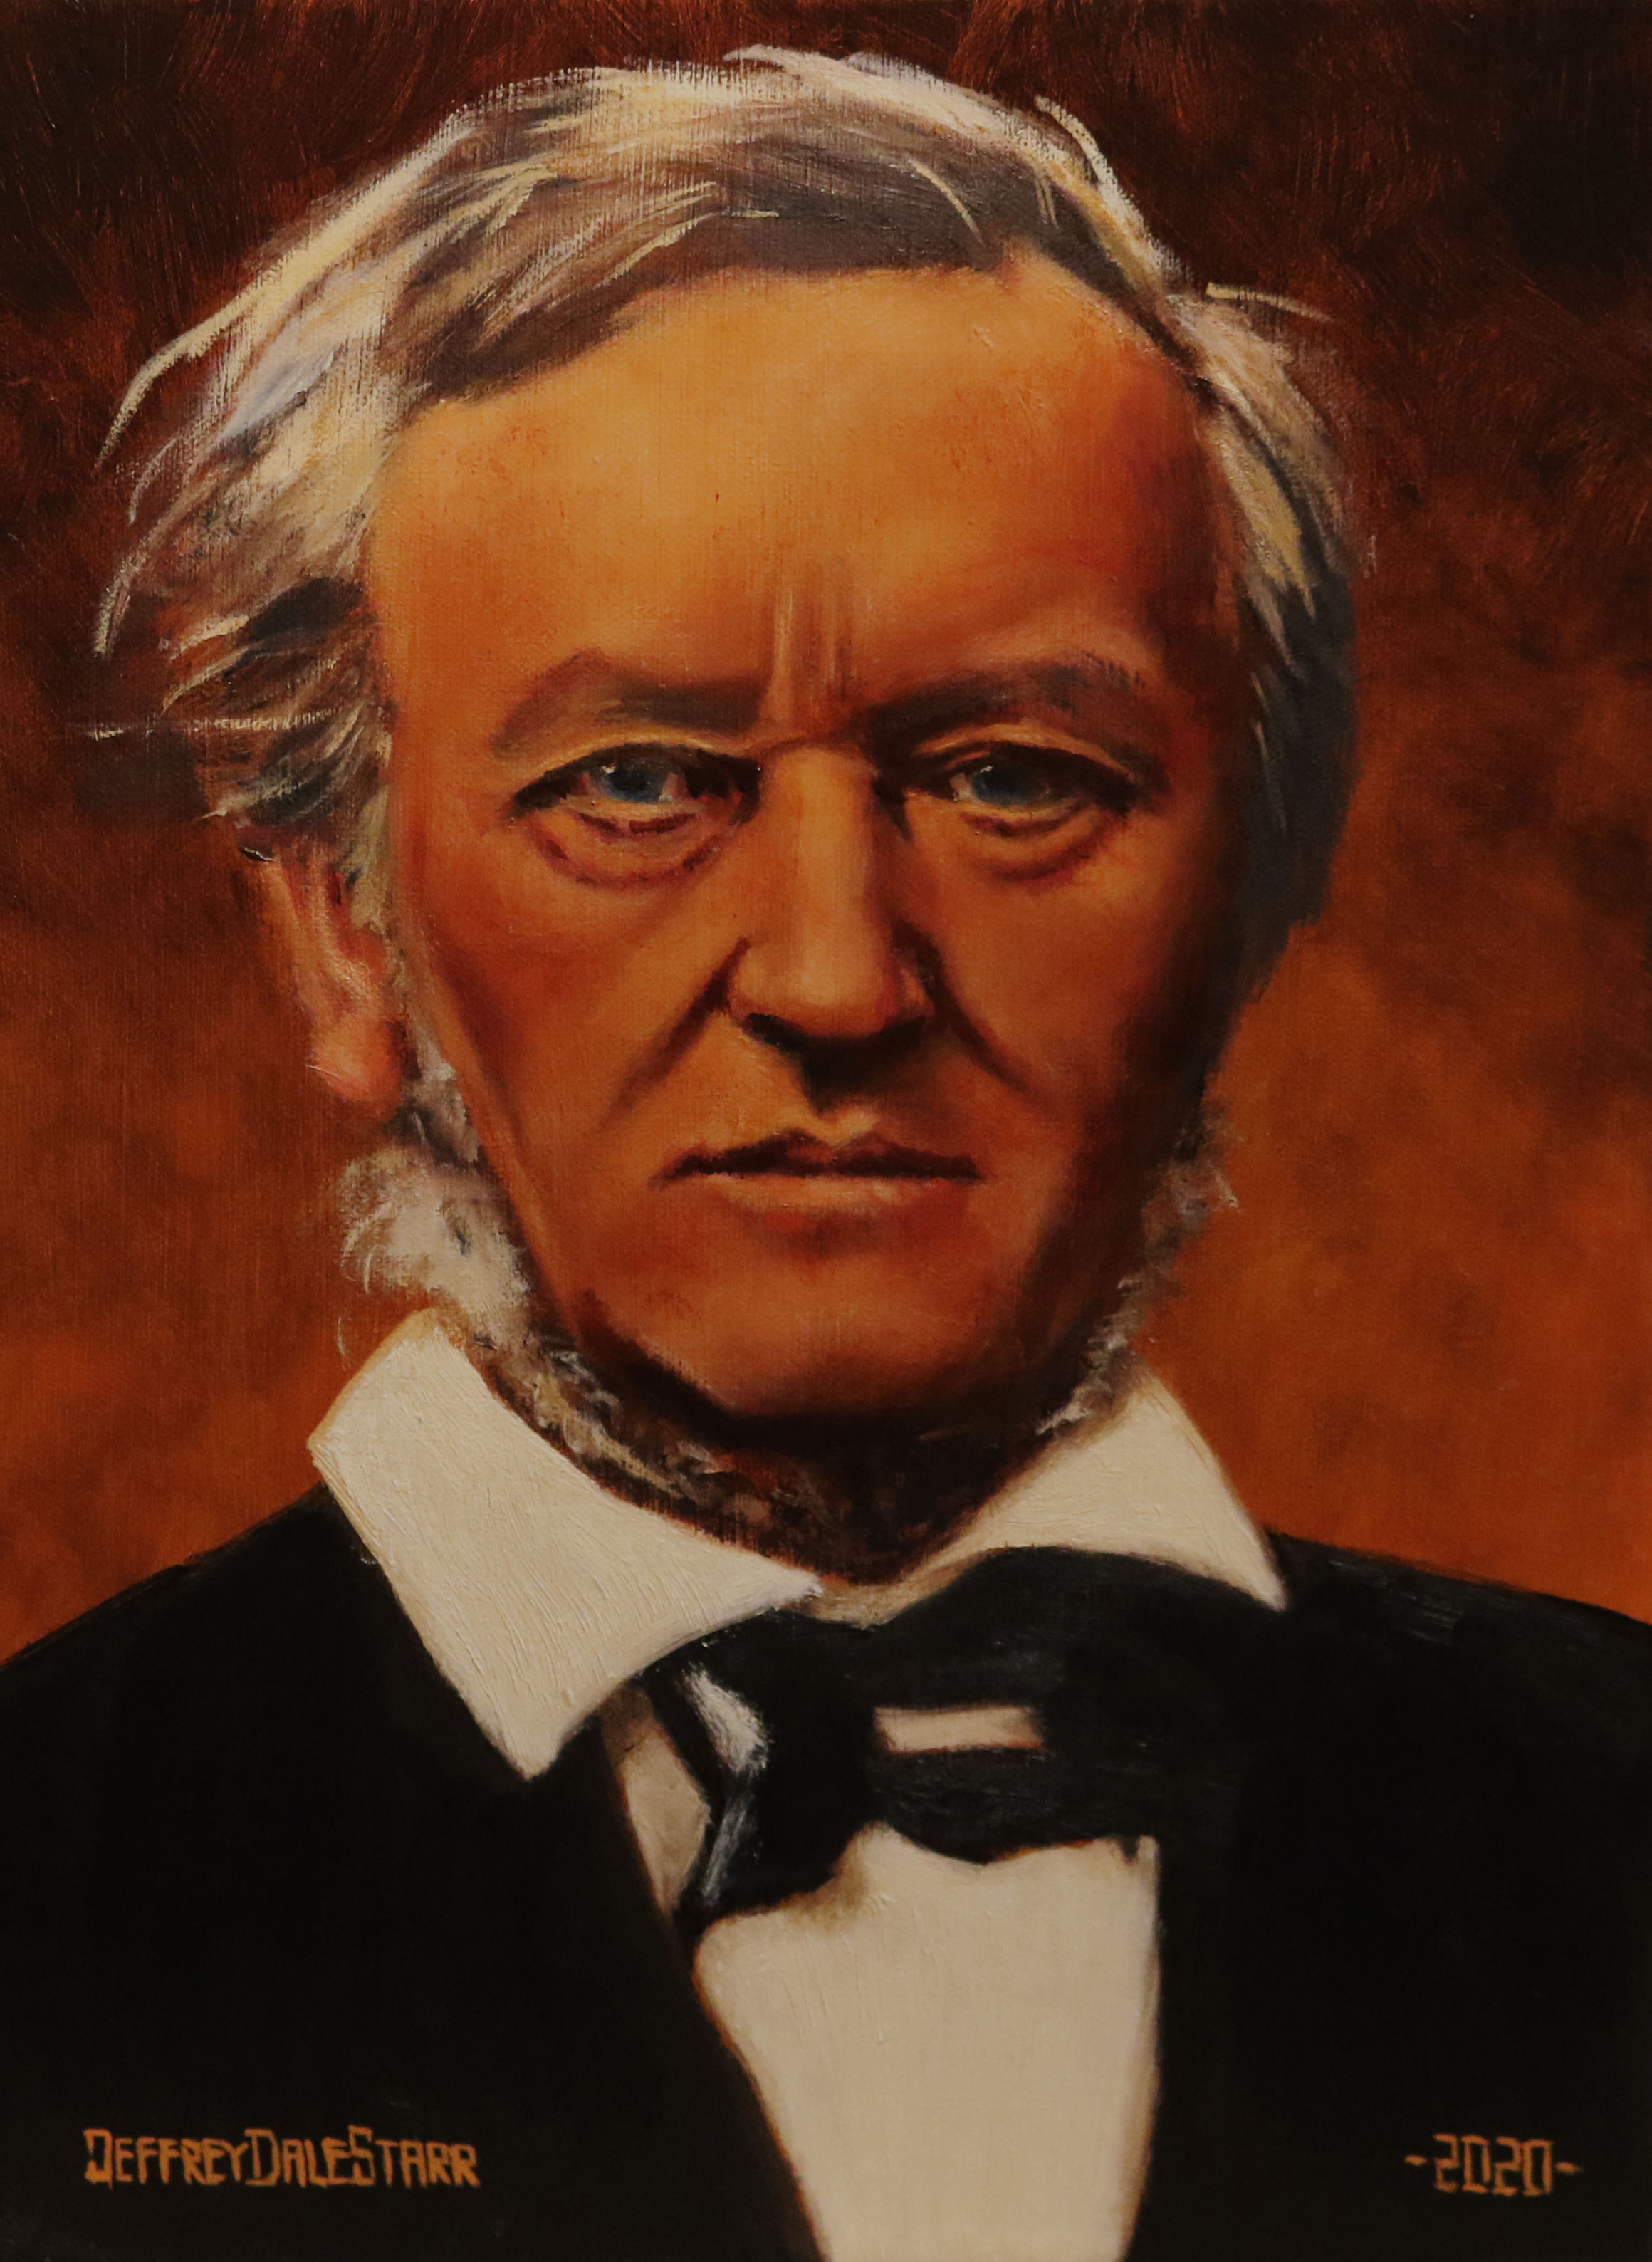 Richard Wagner by Jeffrey Dale Starr